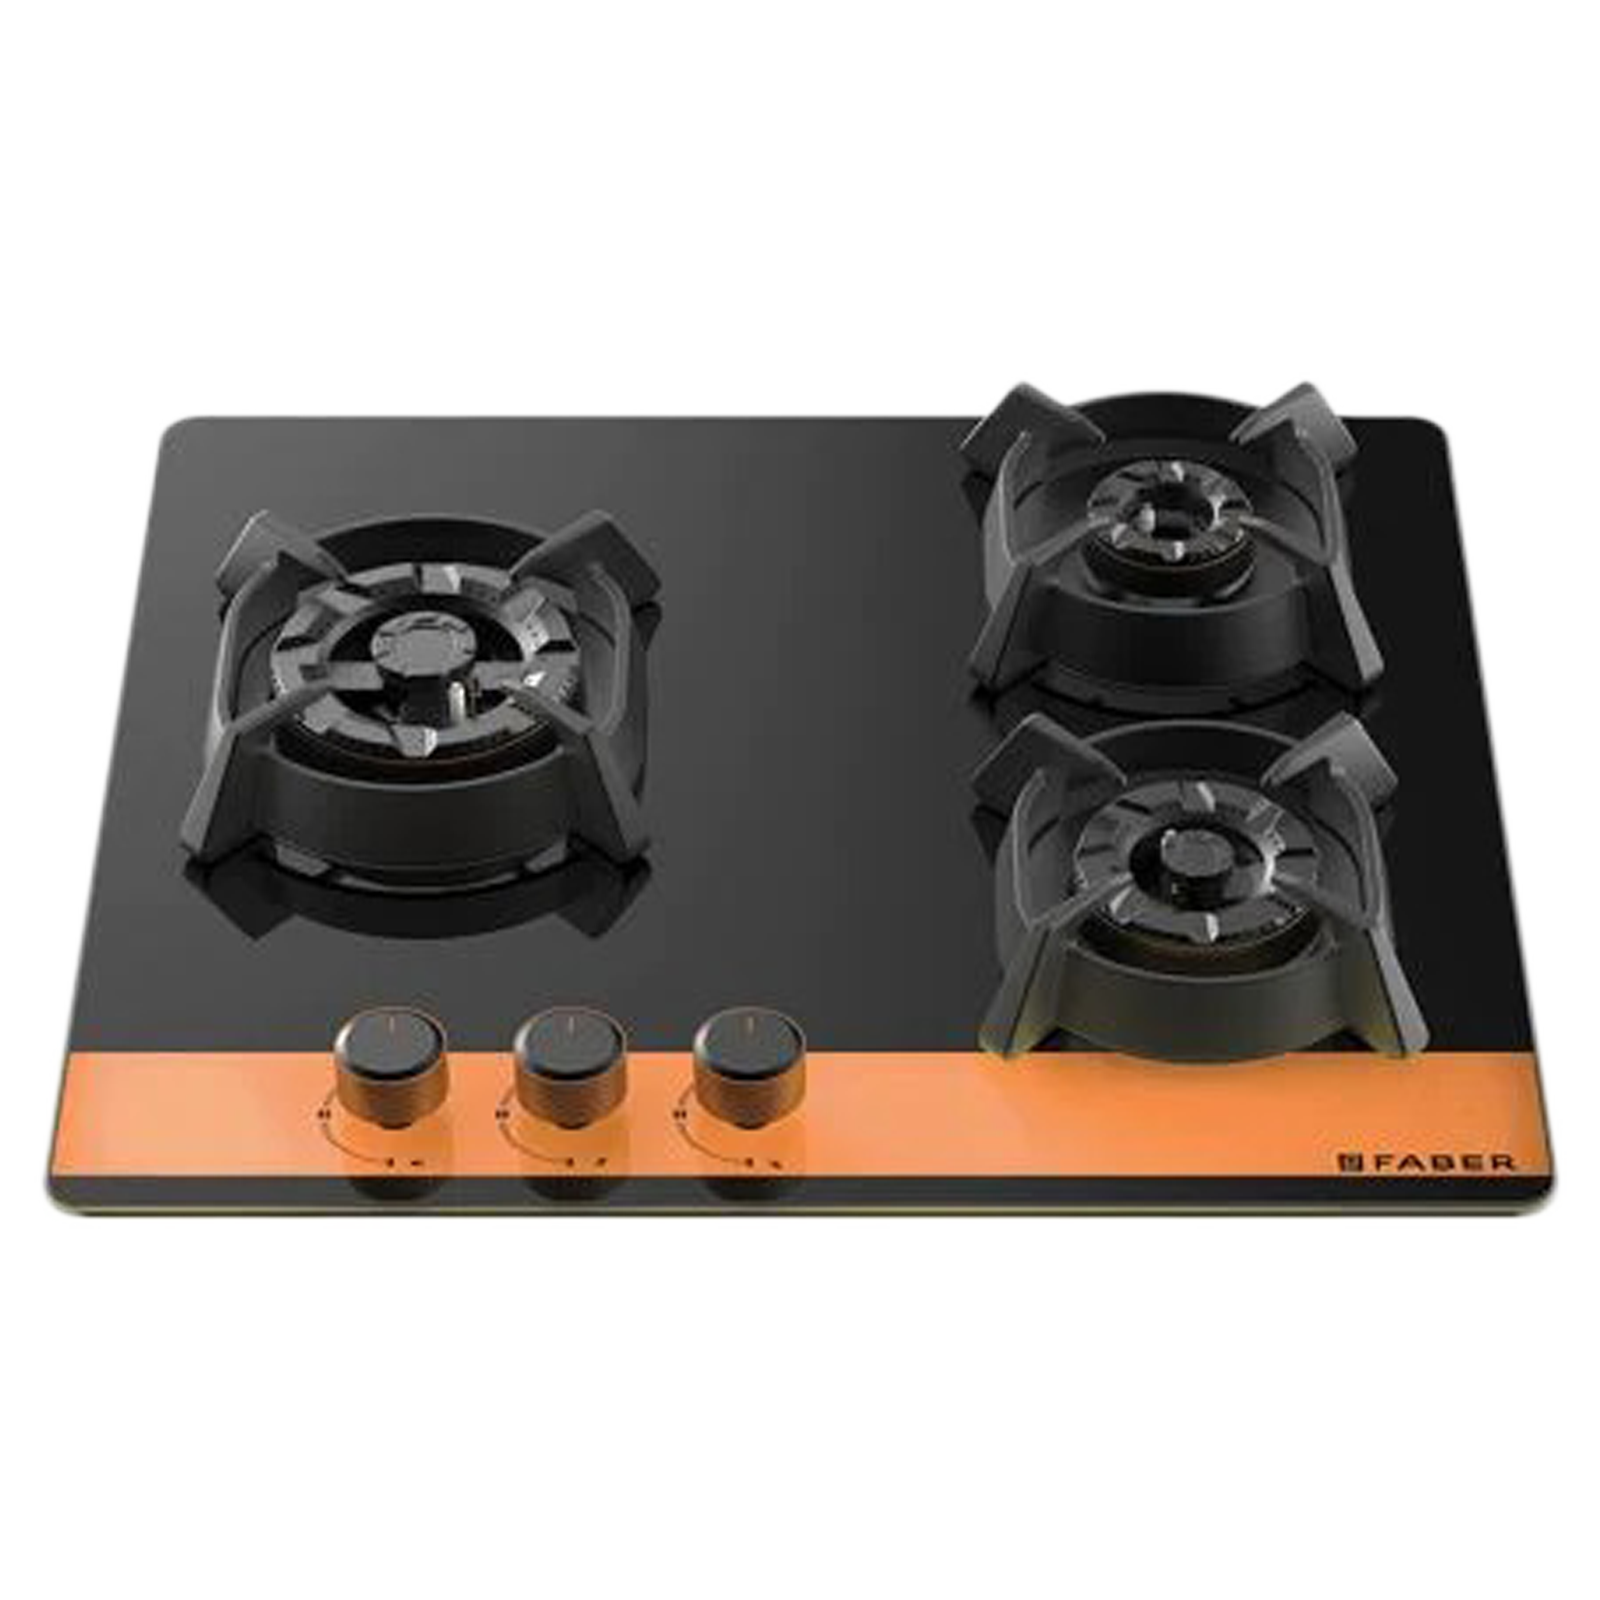 Faber Utopia Pro Ht 603 Br Ci 3 Burner Built-in Gas Hob (Flame Failure Device, 106.0679.382, Black)_1